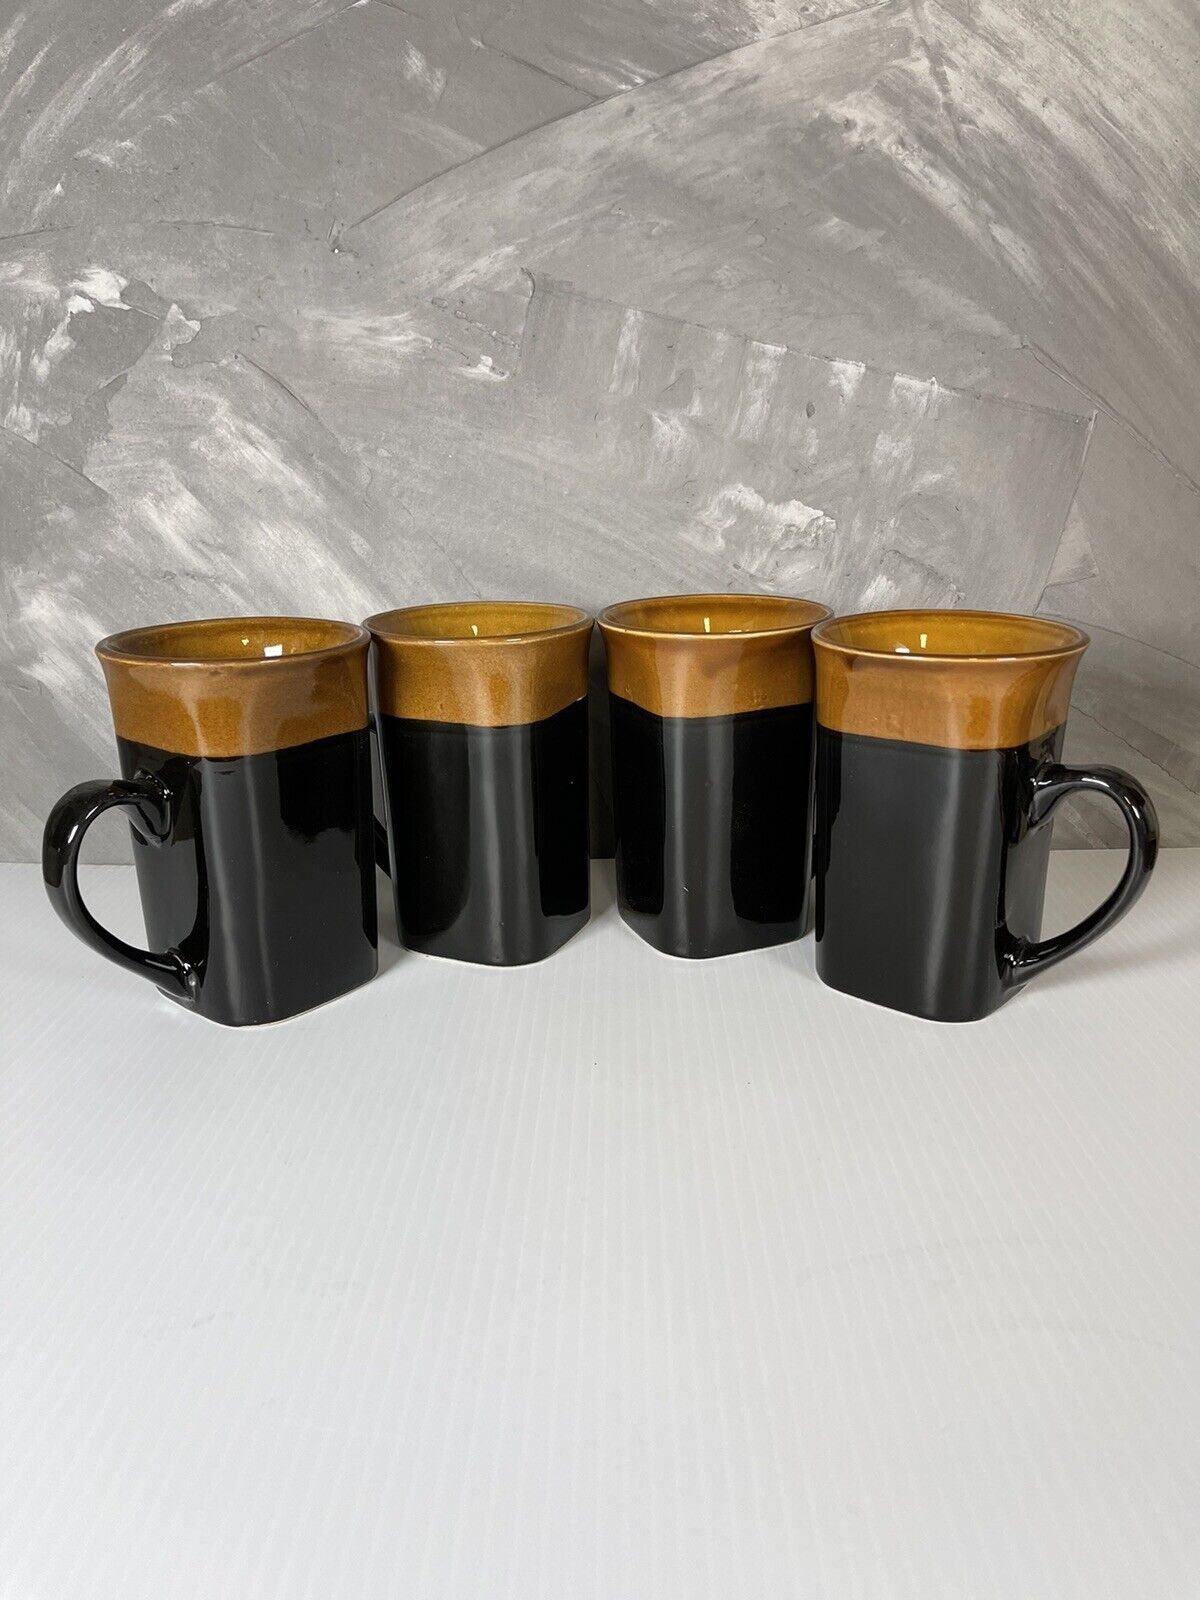 Royal Norfolk Coffe Mugs ❗️Set Of 4❗️ Vintage 